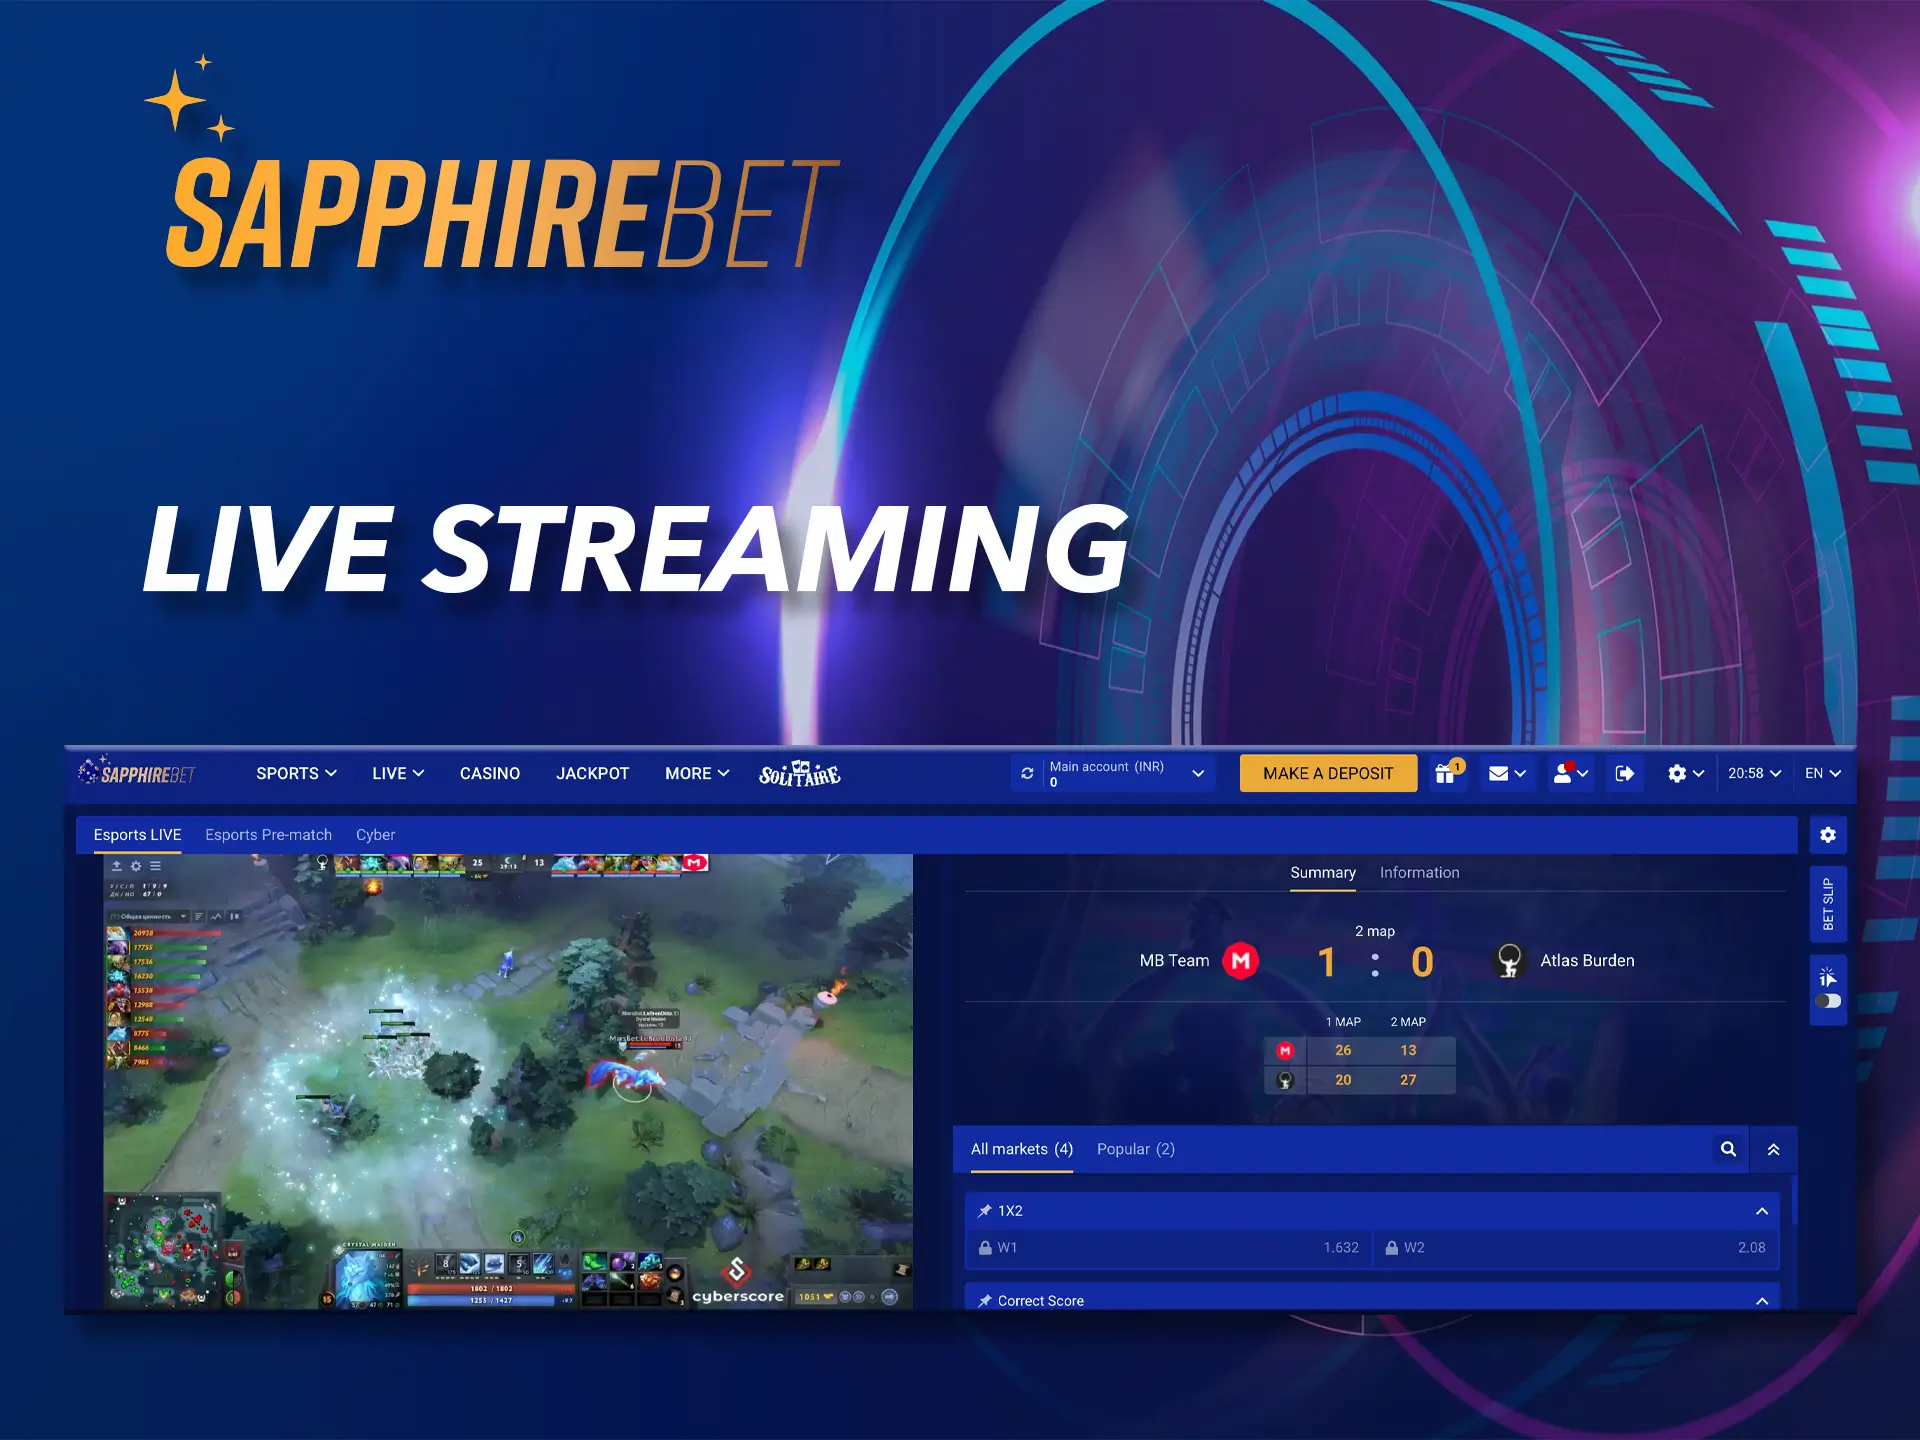 Enjoy the game live on the Sapphirebet website.